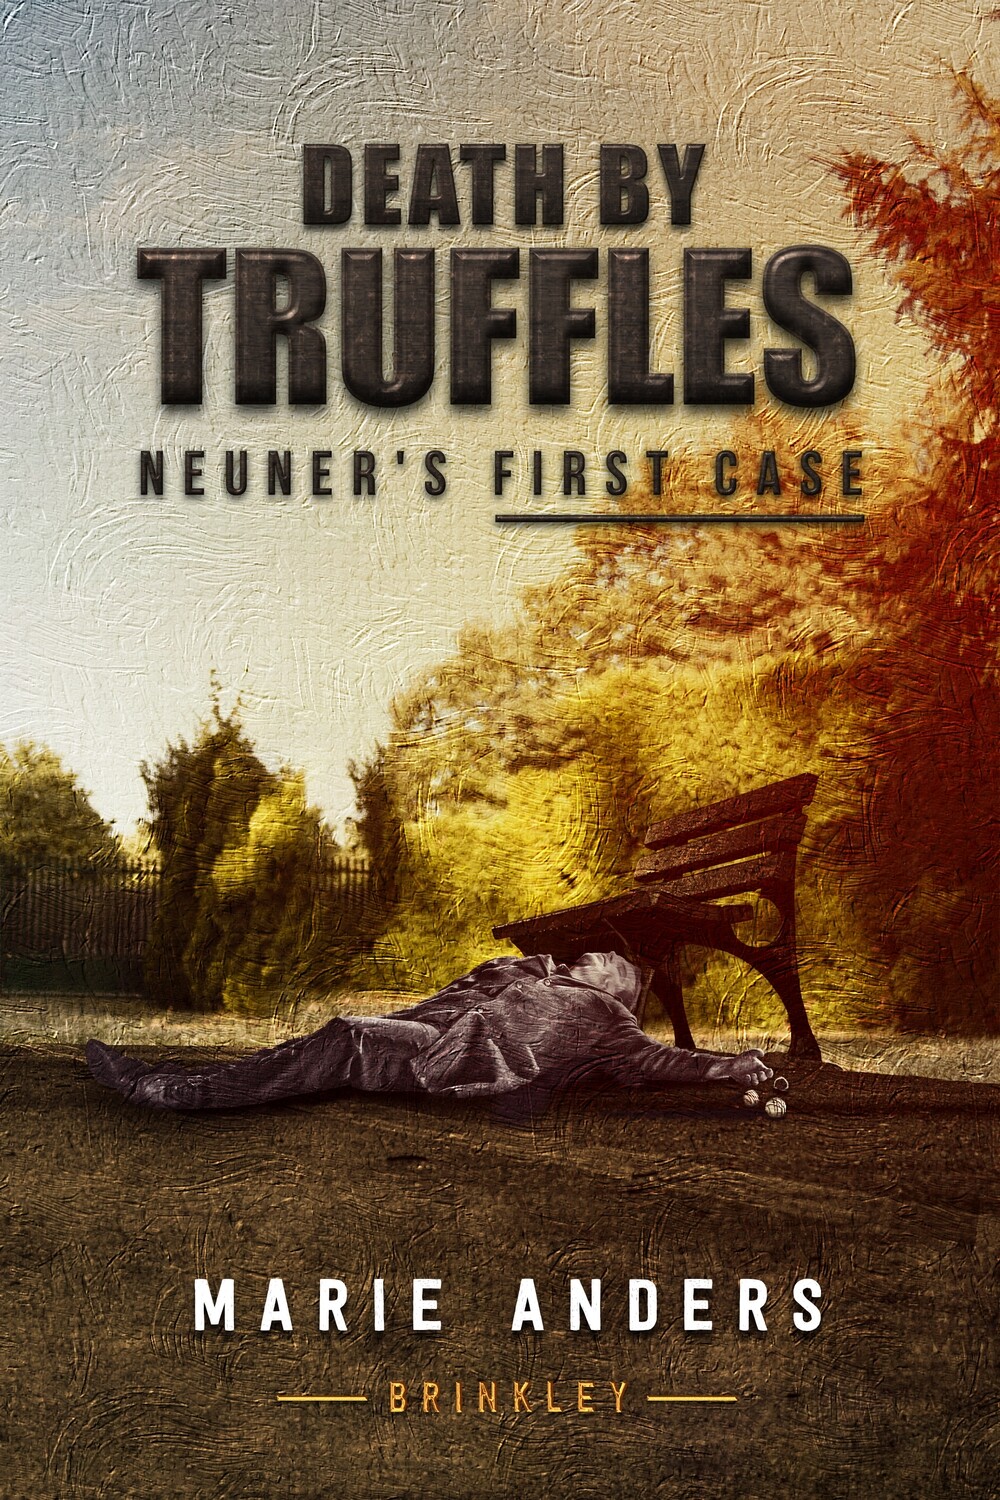 DEATH BY TRUFFLES - AUSTRIAN CRIME NOVEL - 294 pages